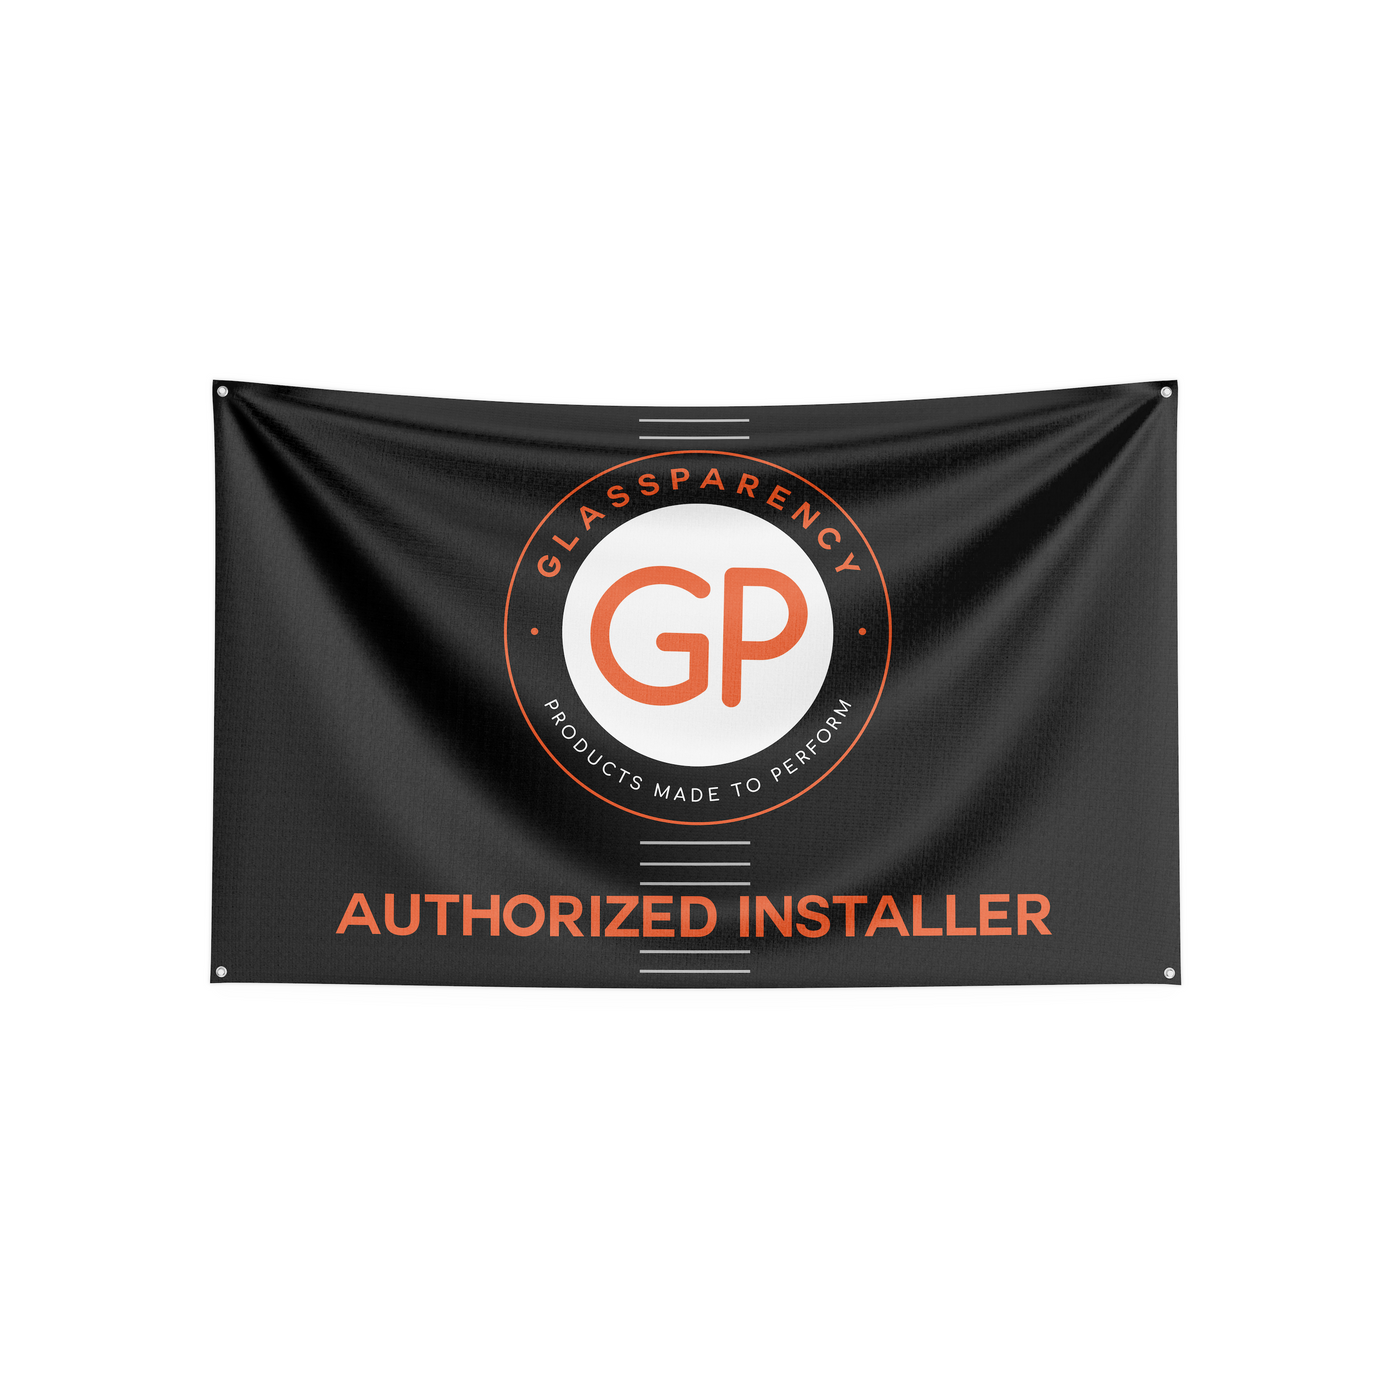 GlassParency Authorized Installer Banner